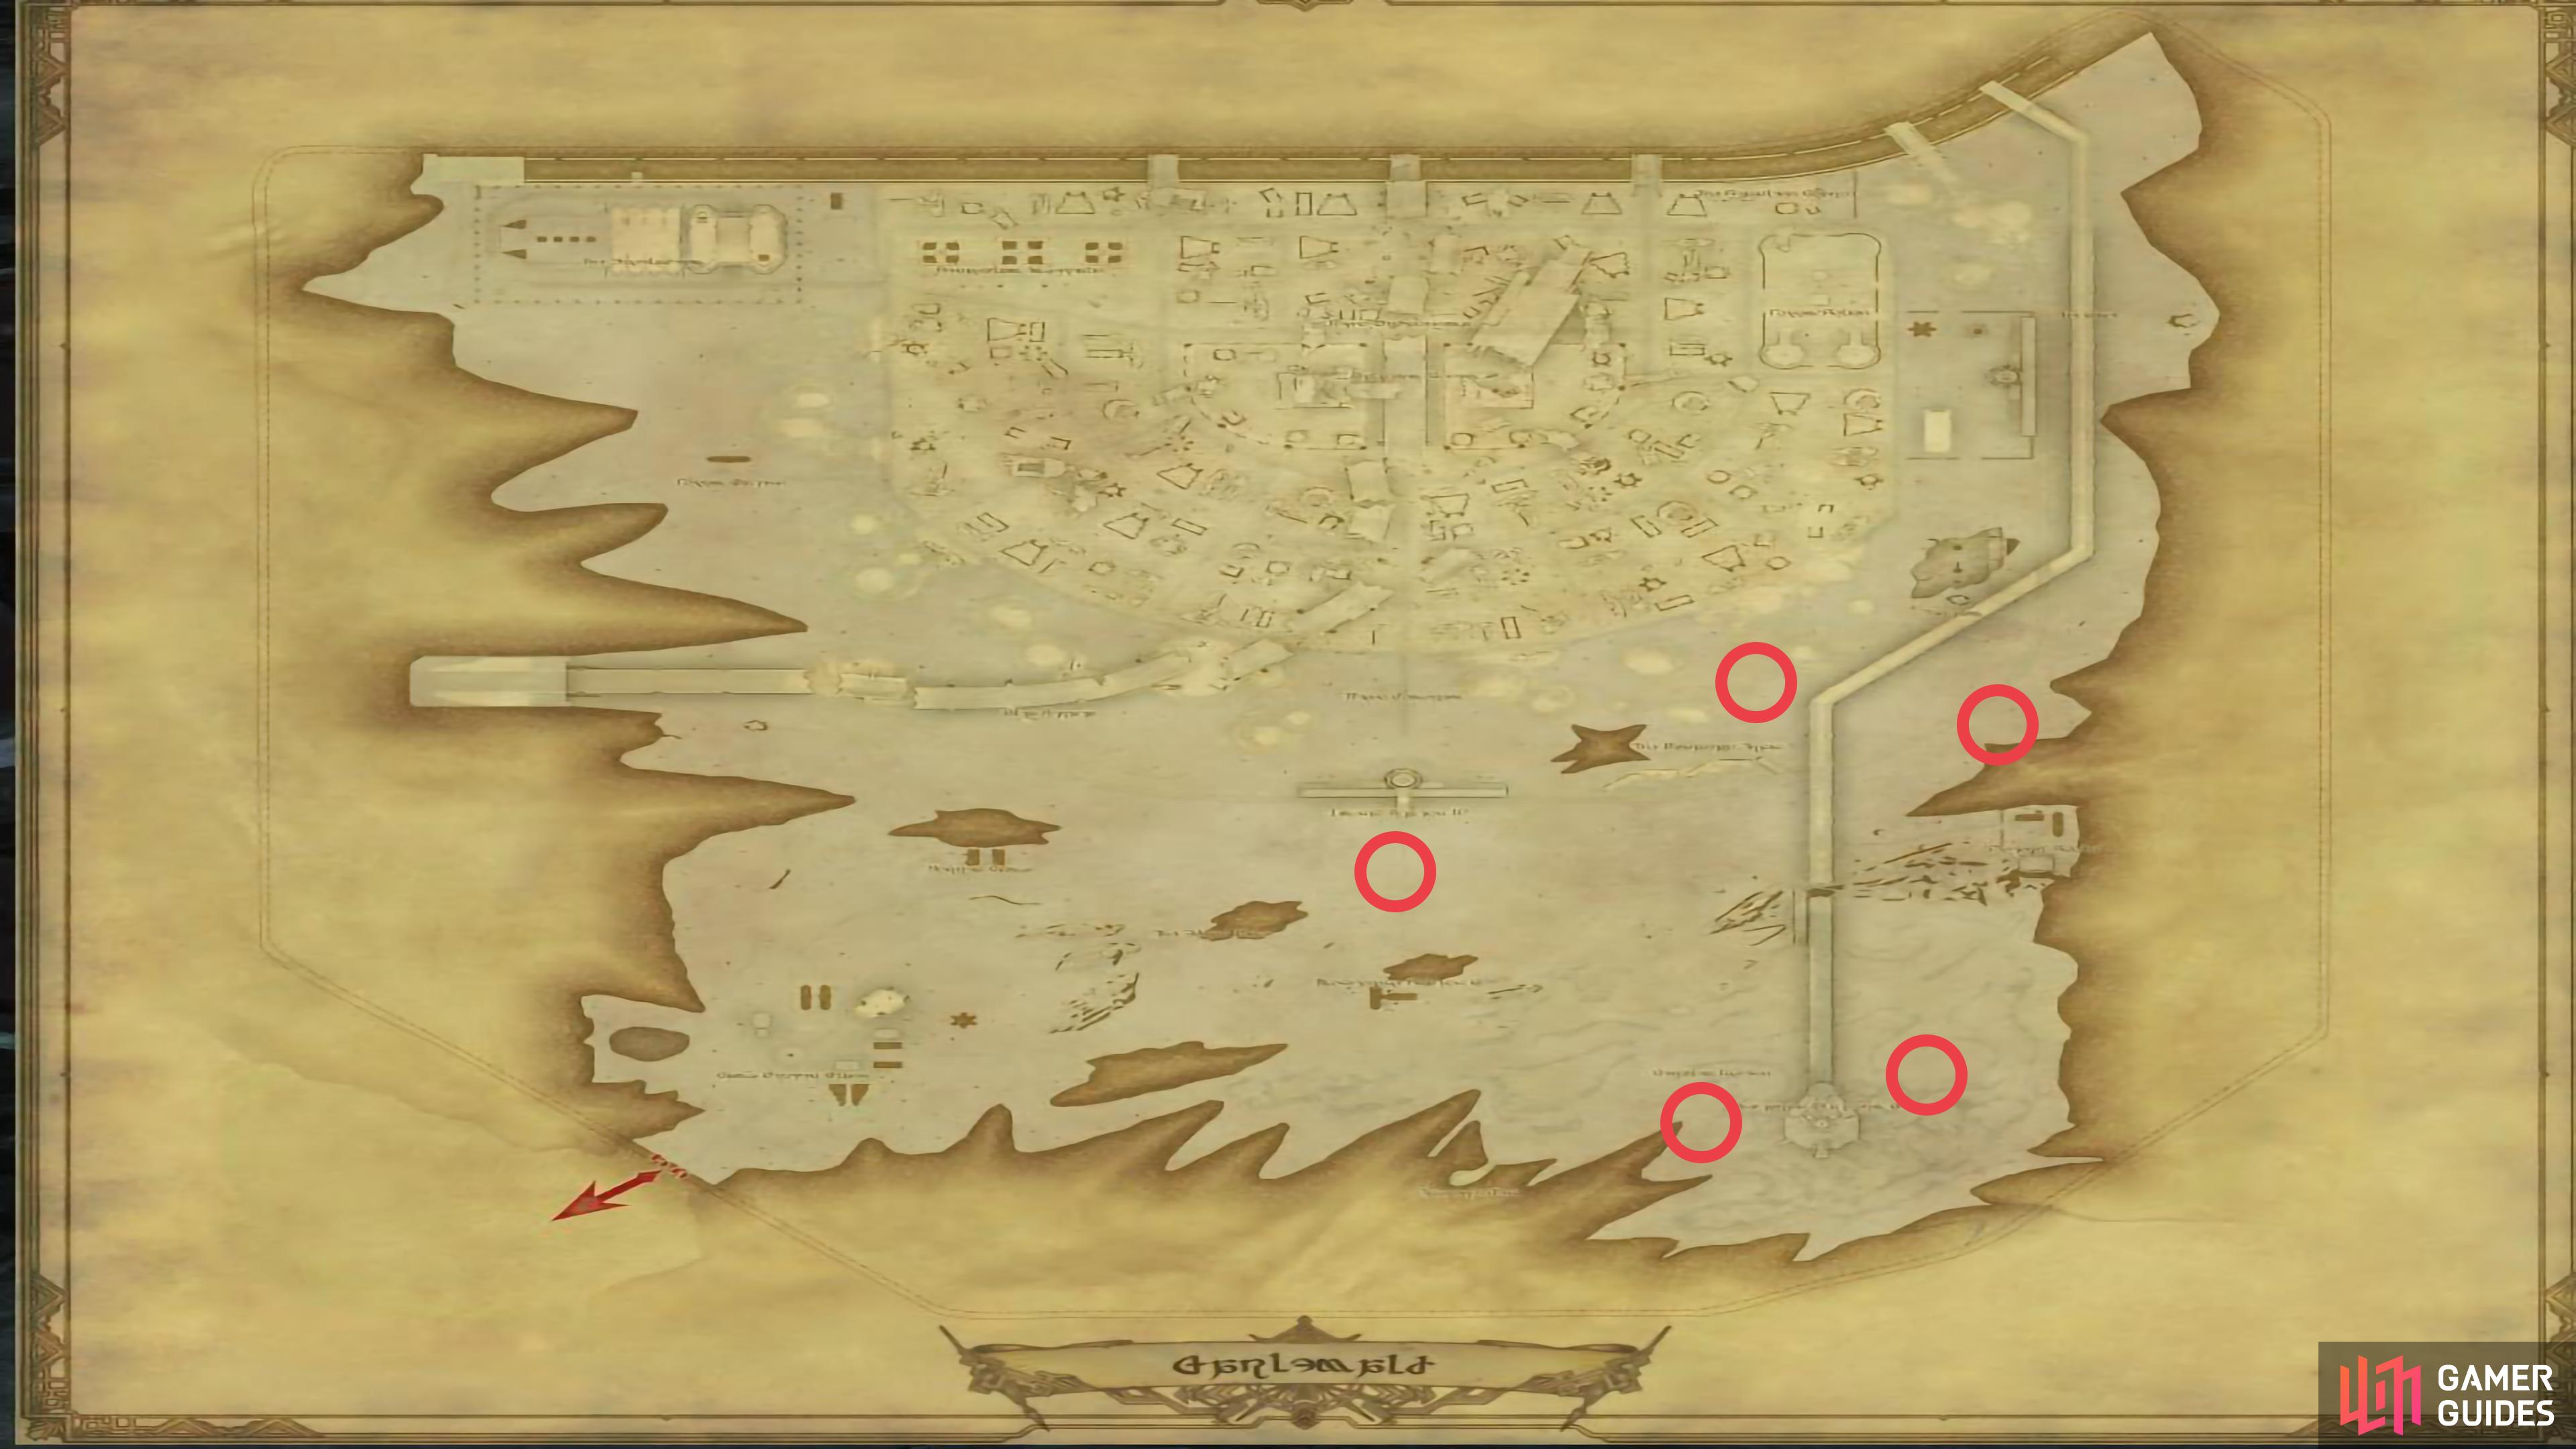 Emperor's Rose Spawn Locations.